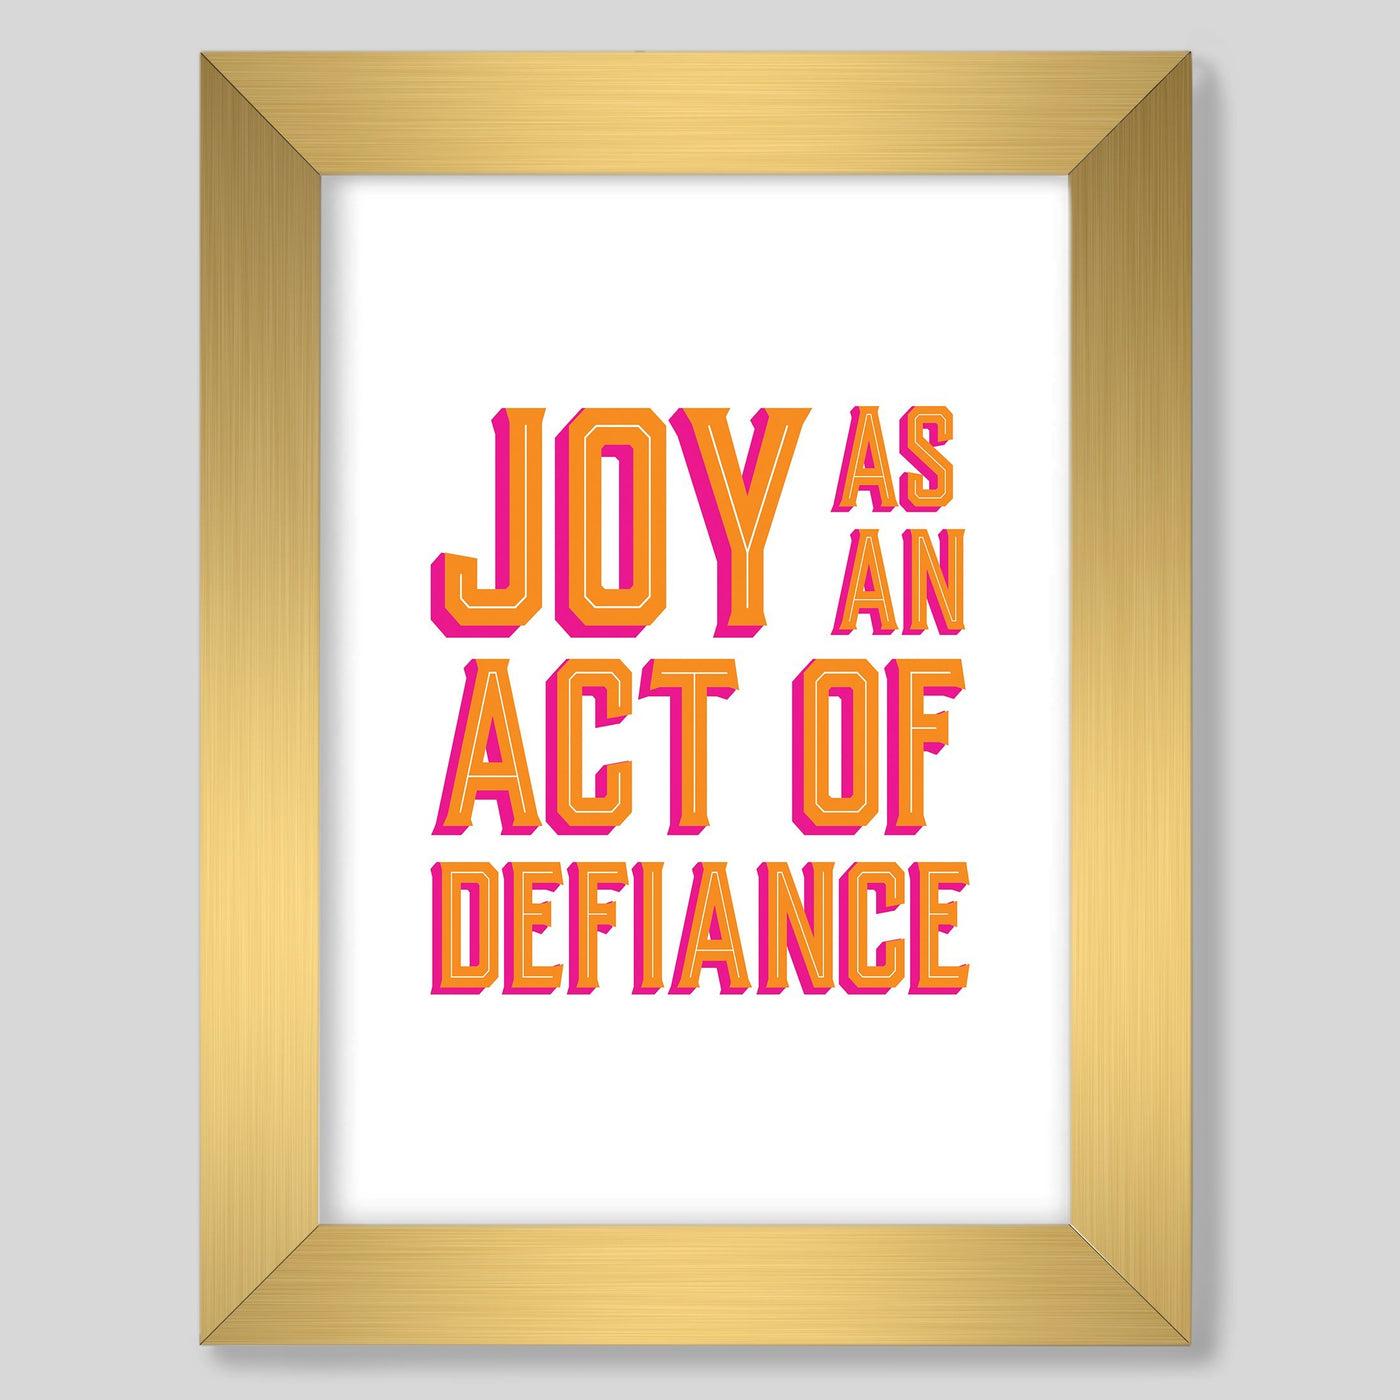 Gallery Prints Joy As An Act of Defiance Print dombezalergii